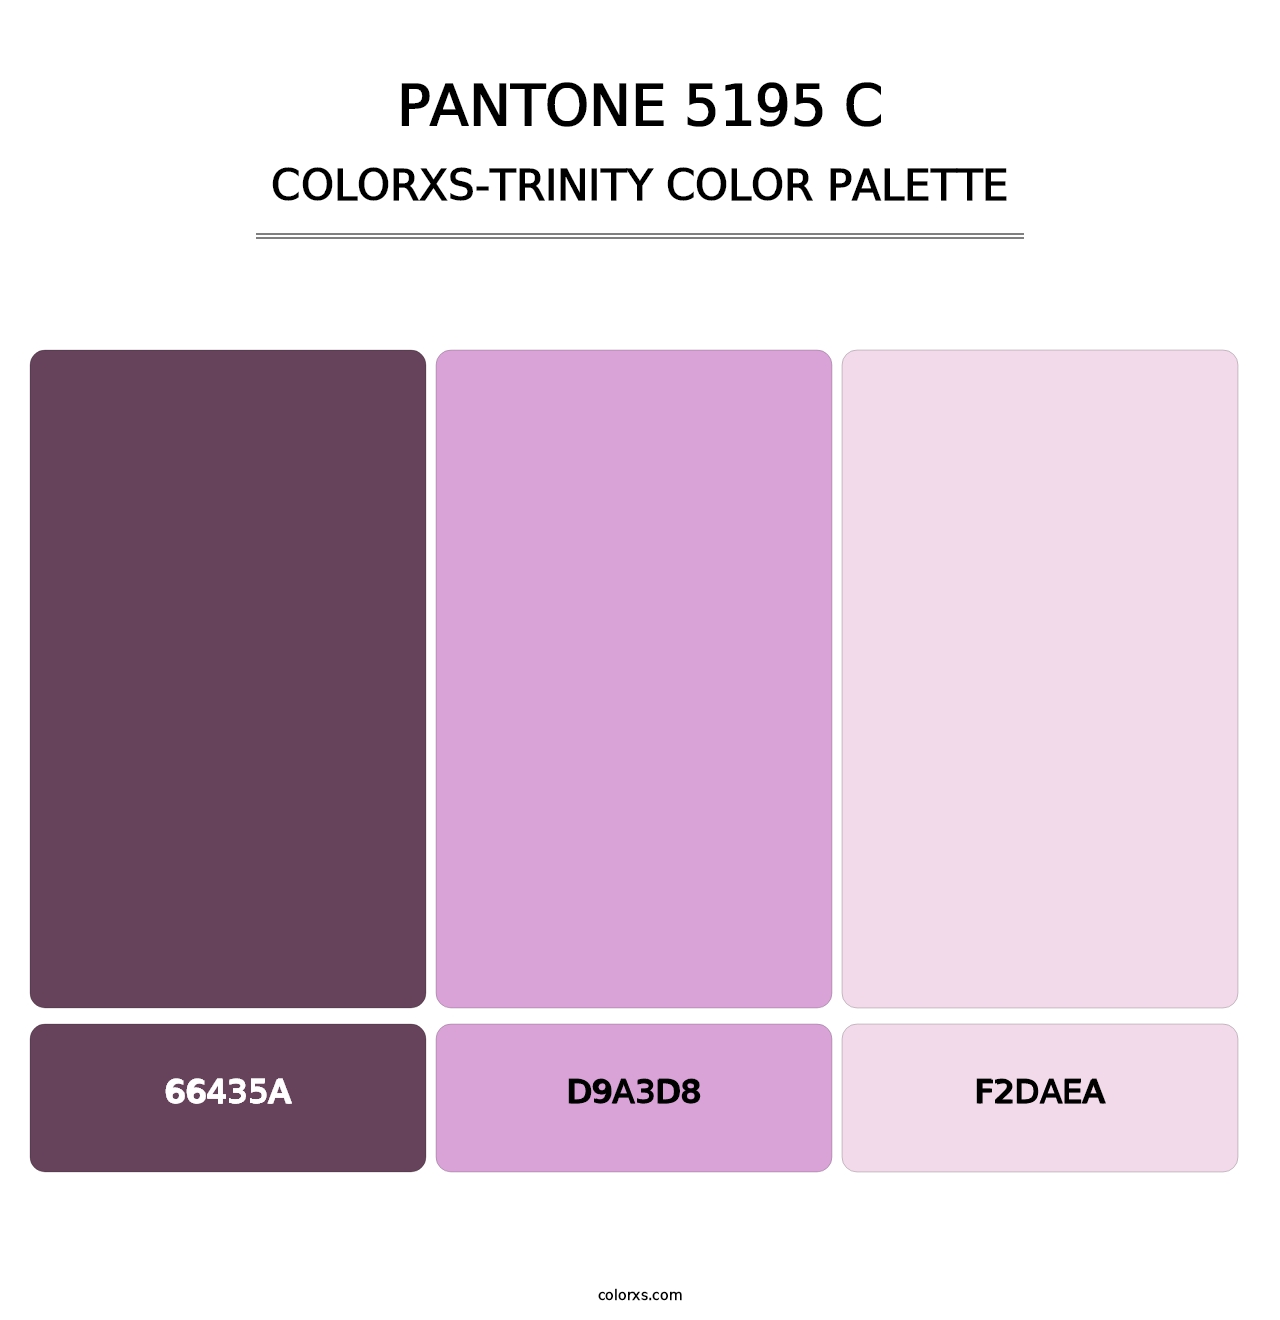 PANTONE 5195 C - Colorxs Trinity Palette